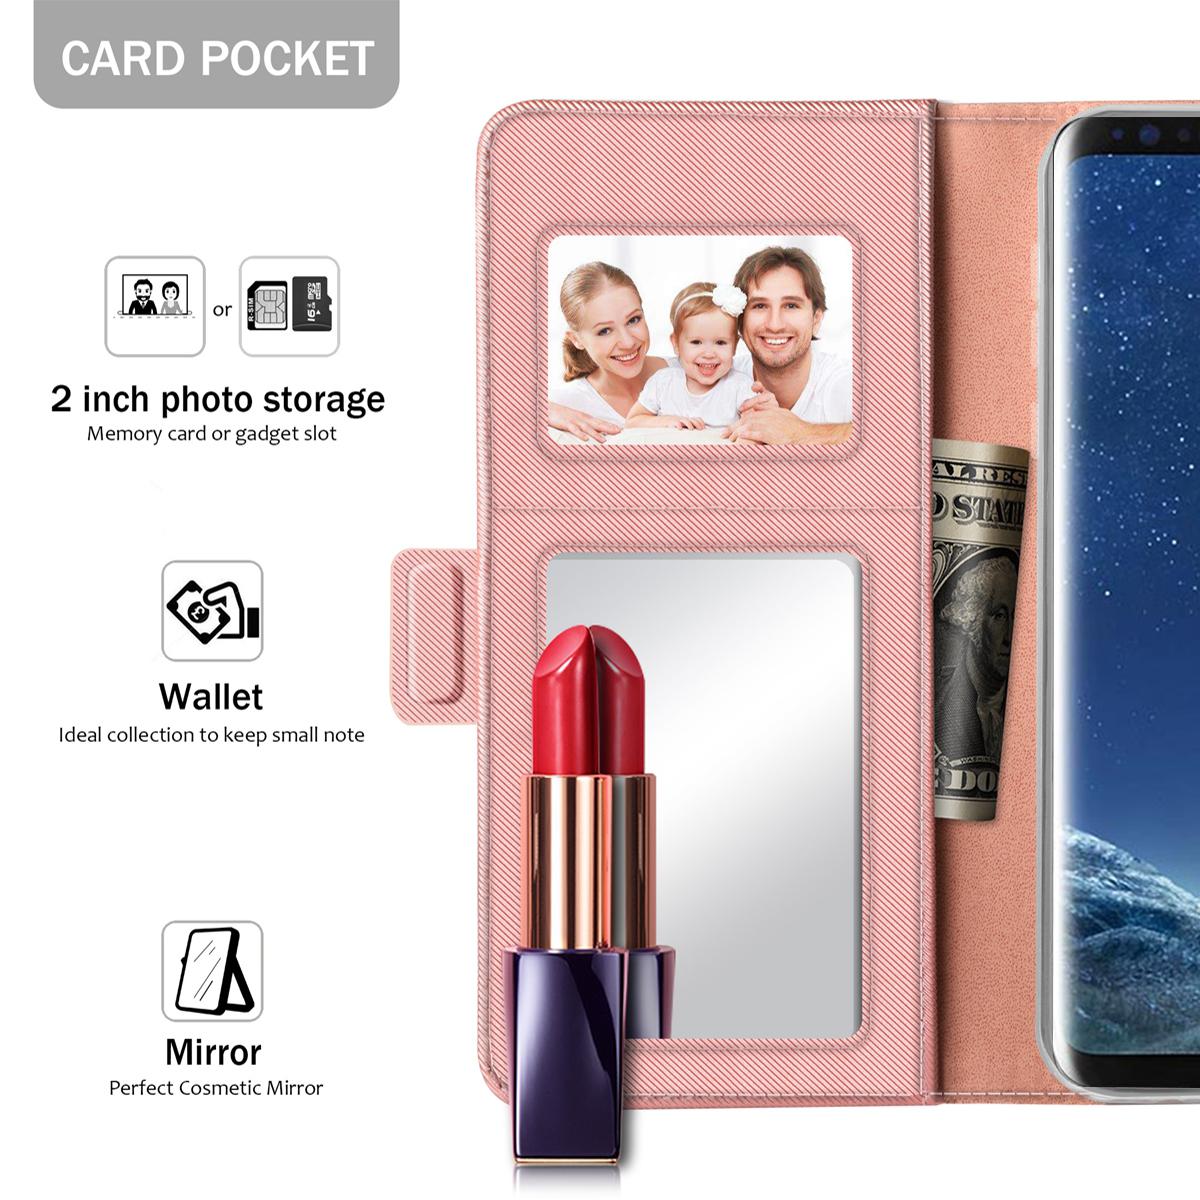 Funda con solapa Espejo Samsung Galaxy S8 Pink Gold